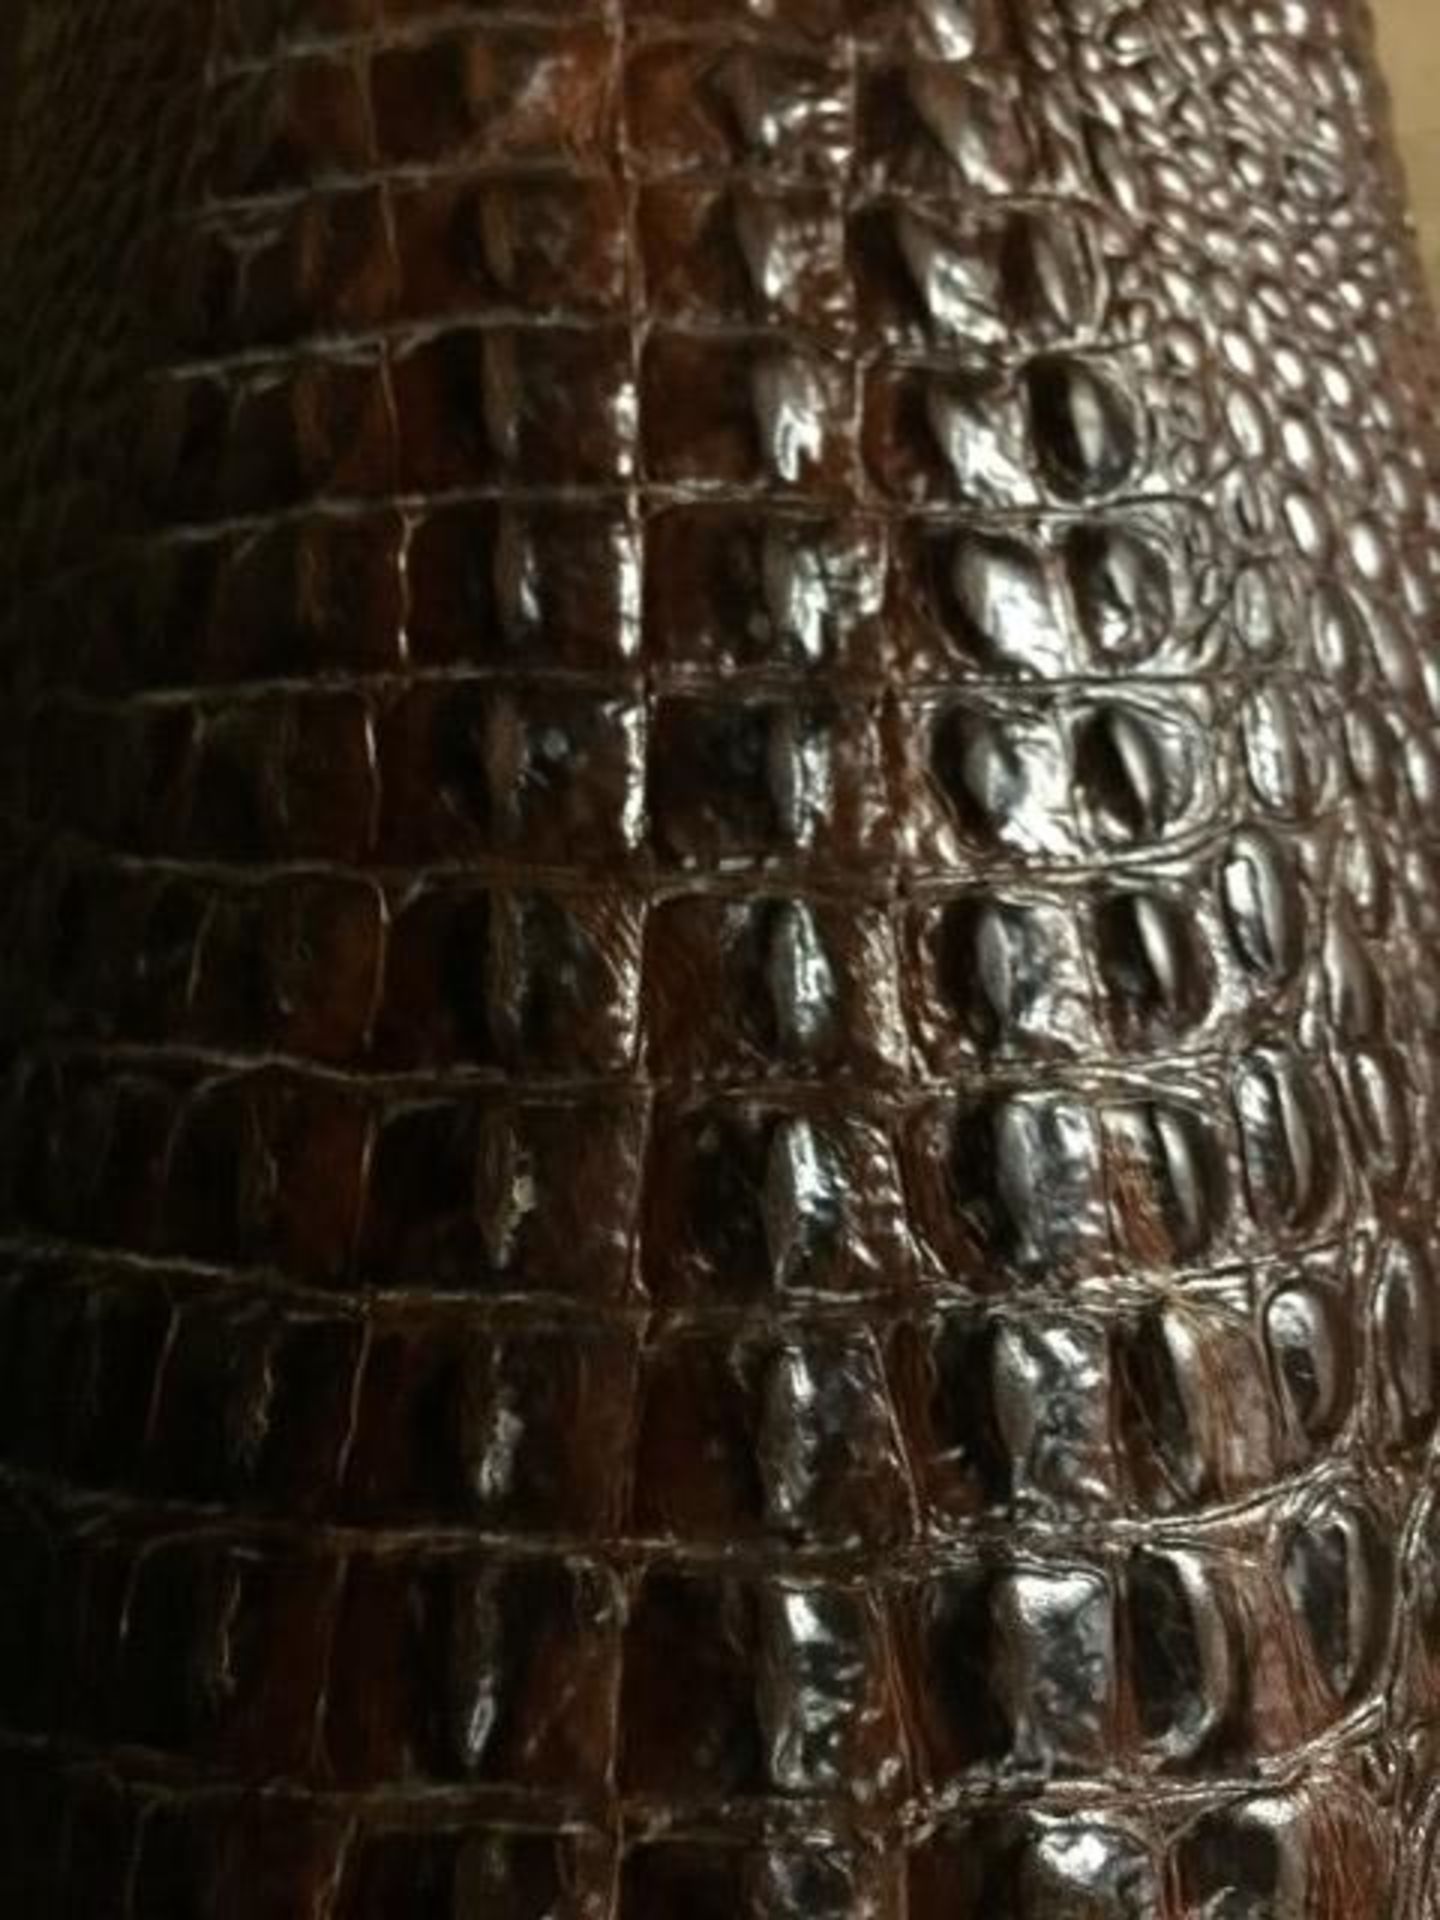 (427) Sq. Ft., 2.5 Oz. Dark Brown Croc Print Italian Calf Leather Sides.